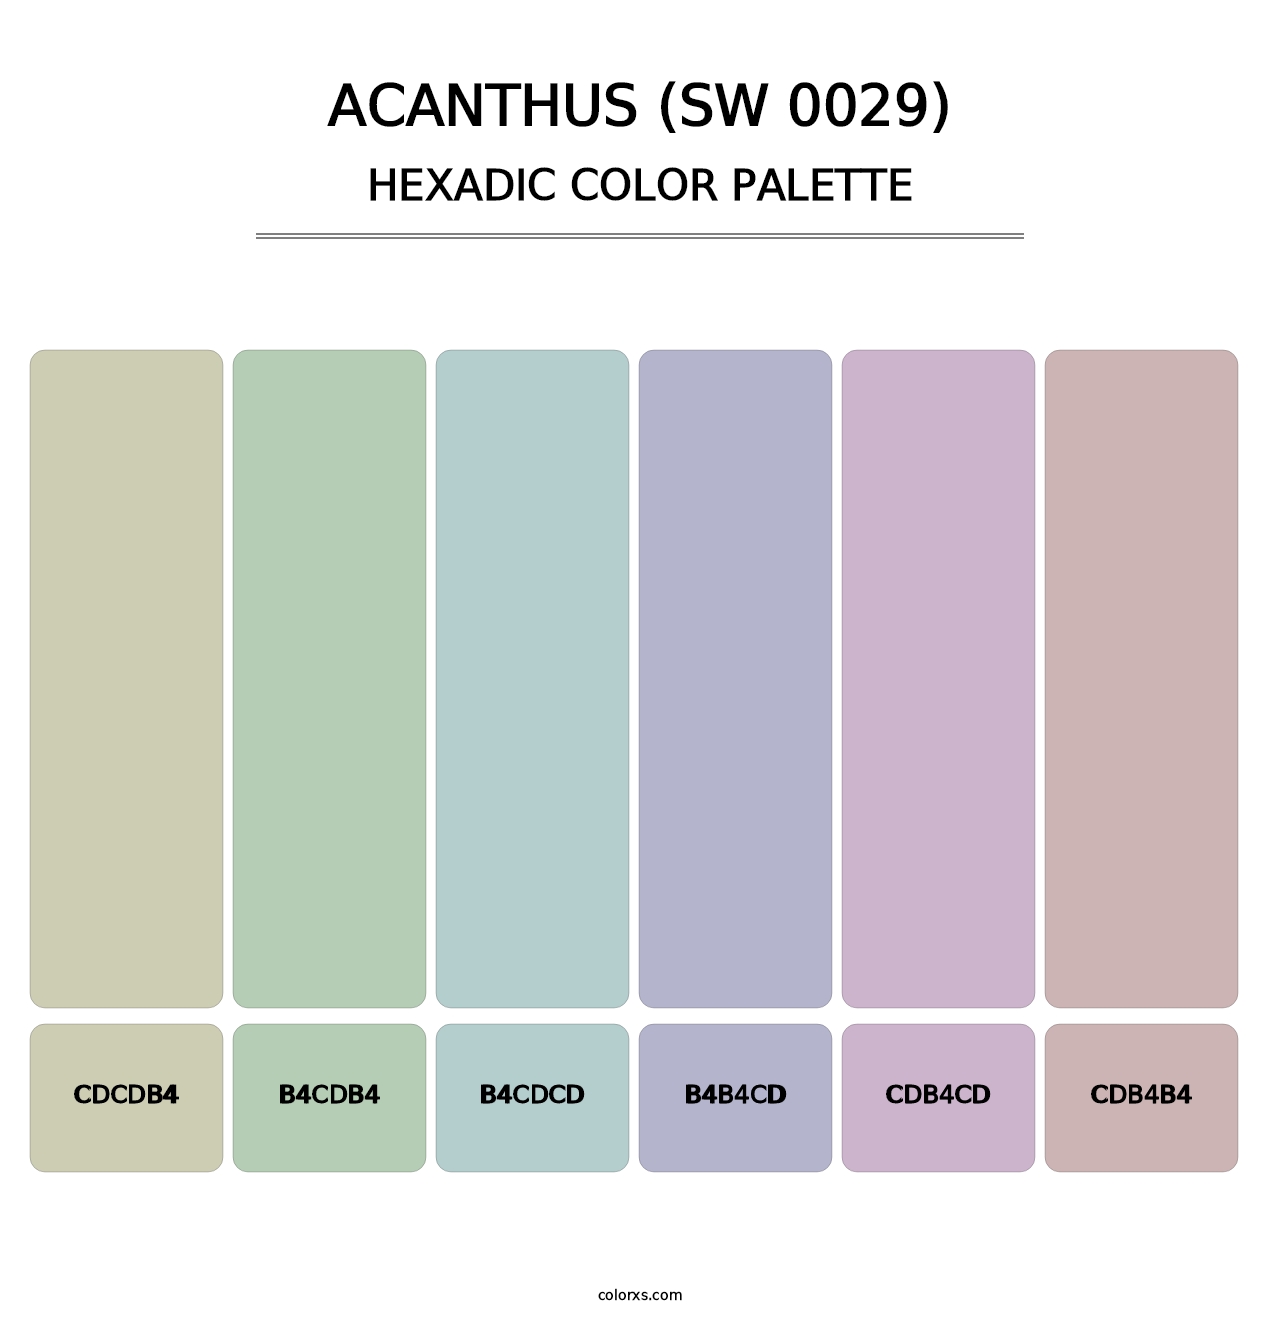 Acanthus (SW 0029) - Hexadic Color Palette